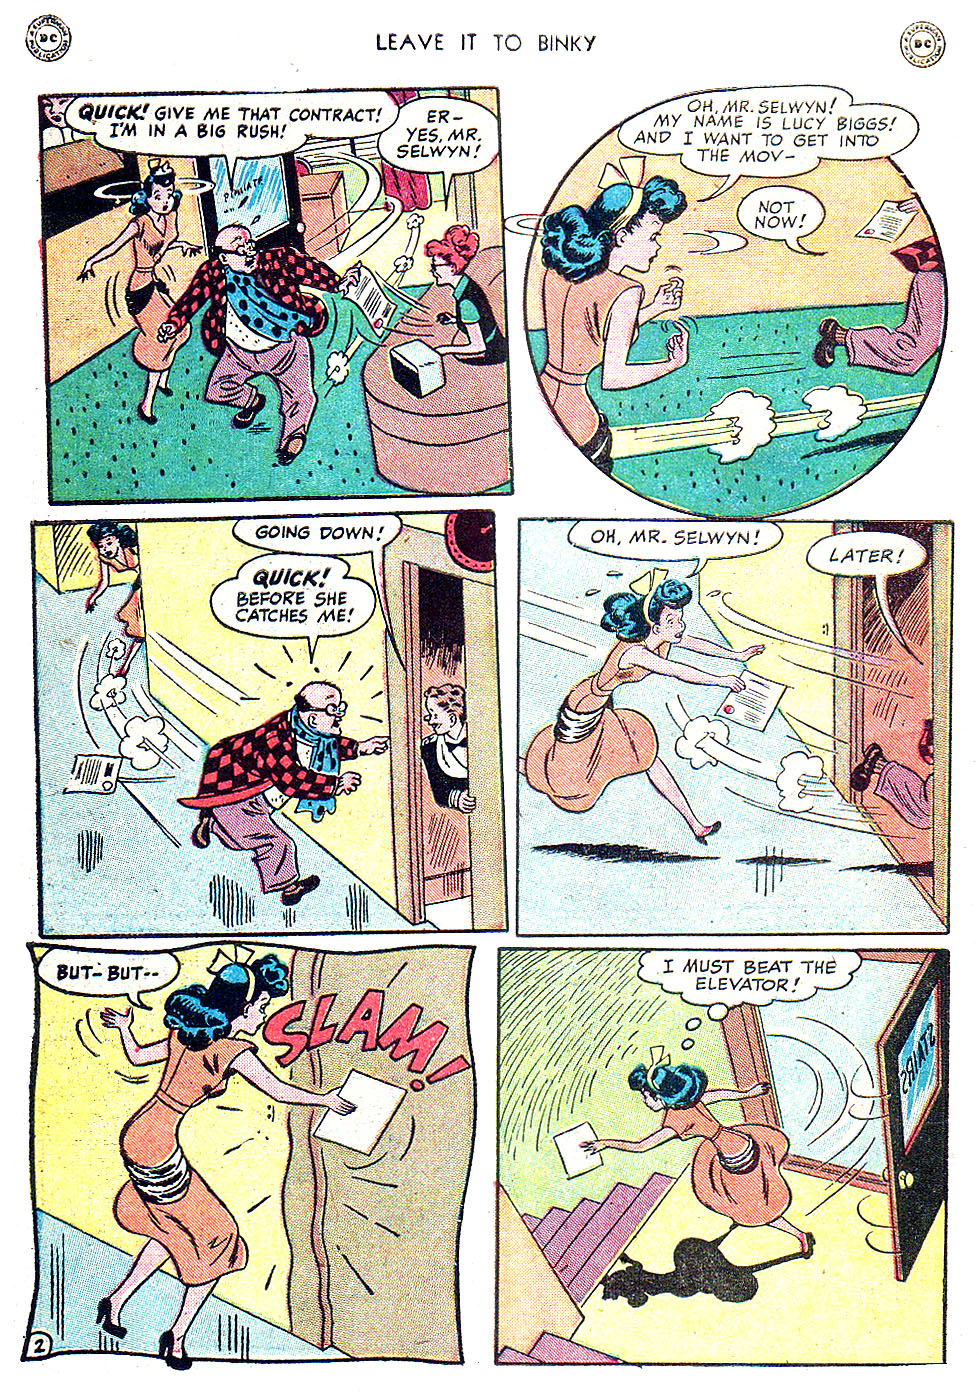 Read online Leave it to Binky comic -  Issue #4 - 14